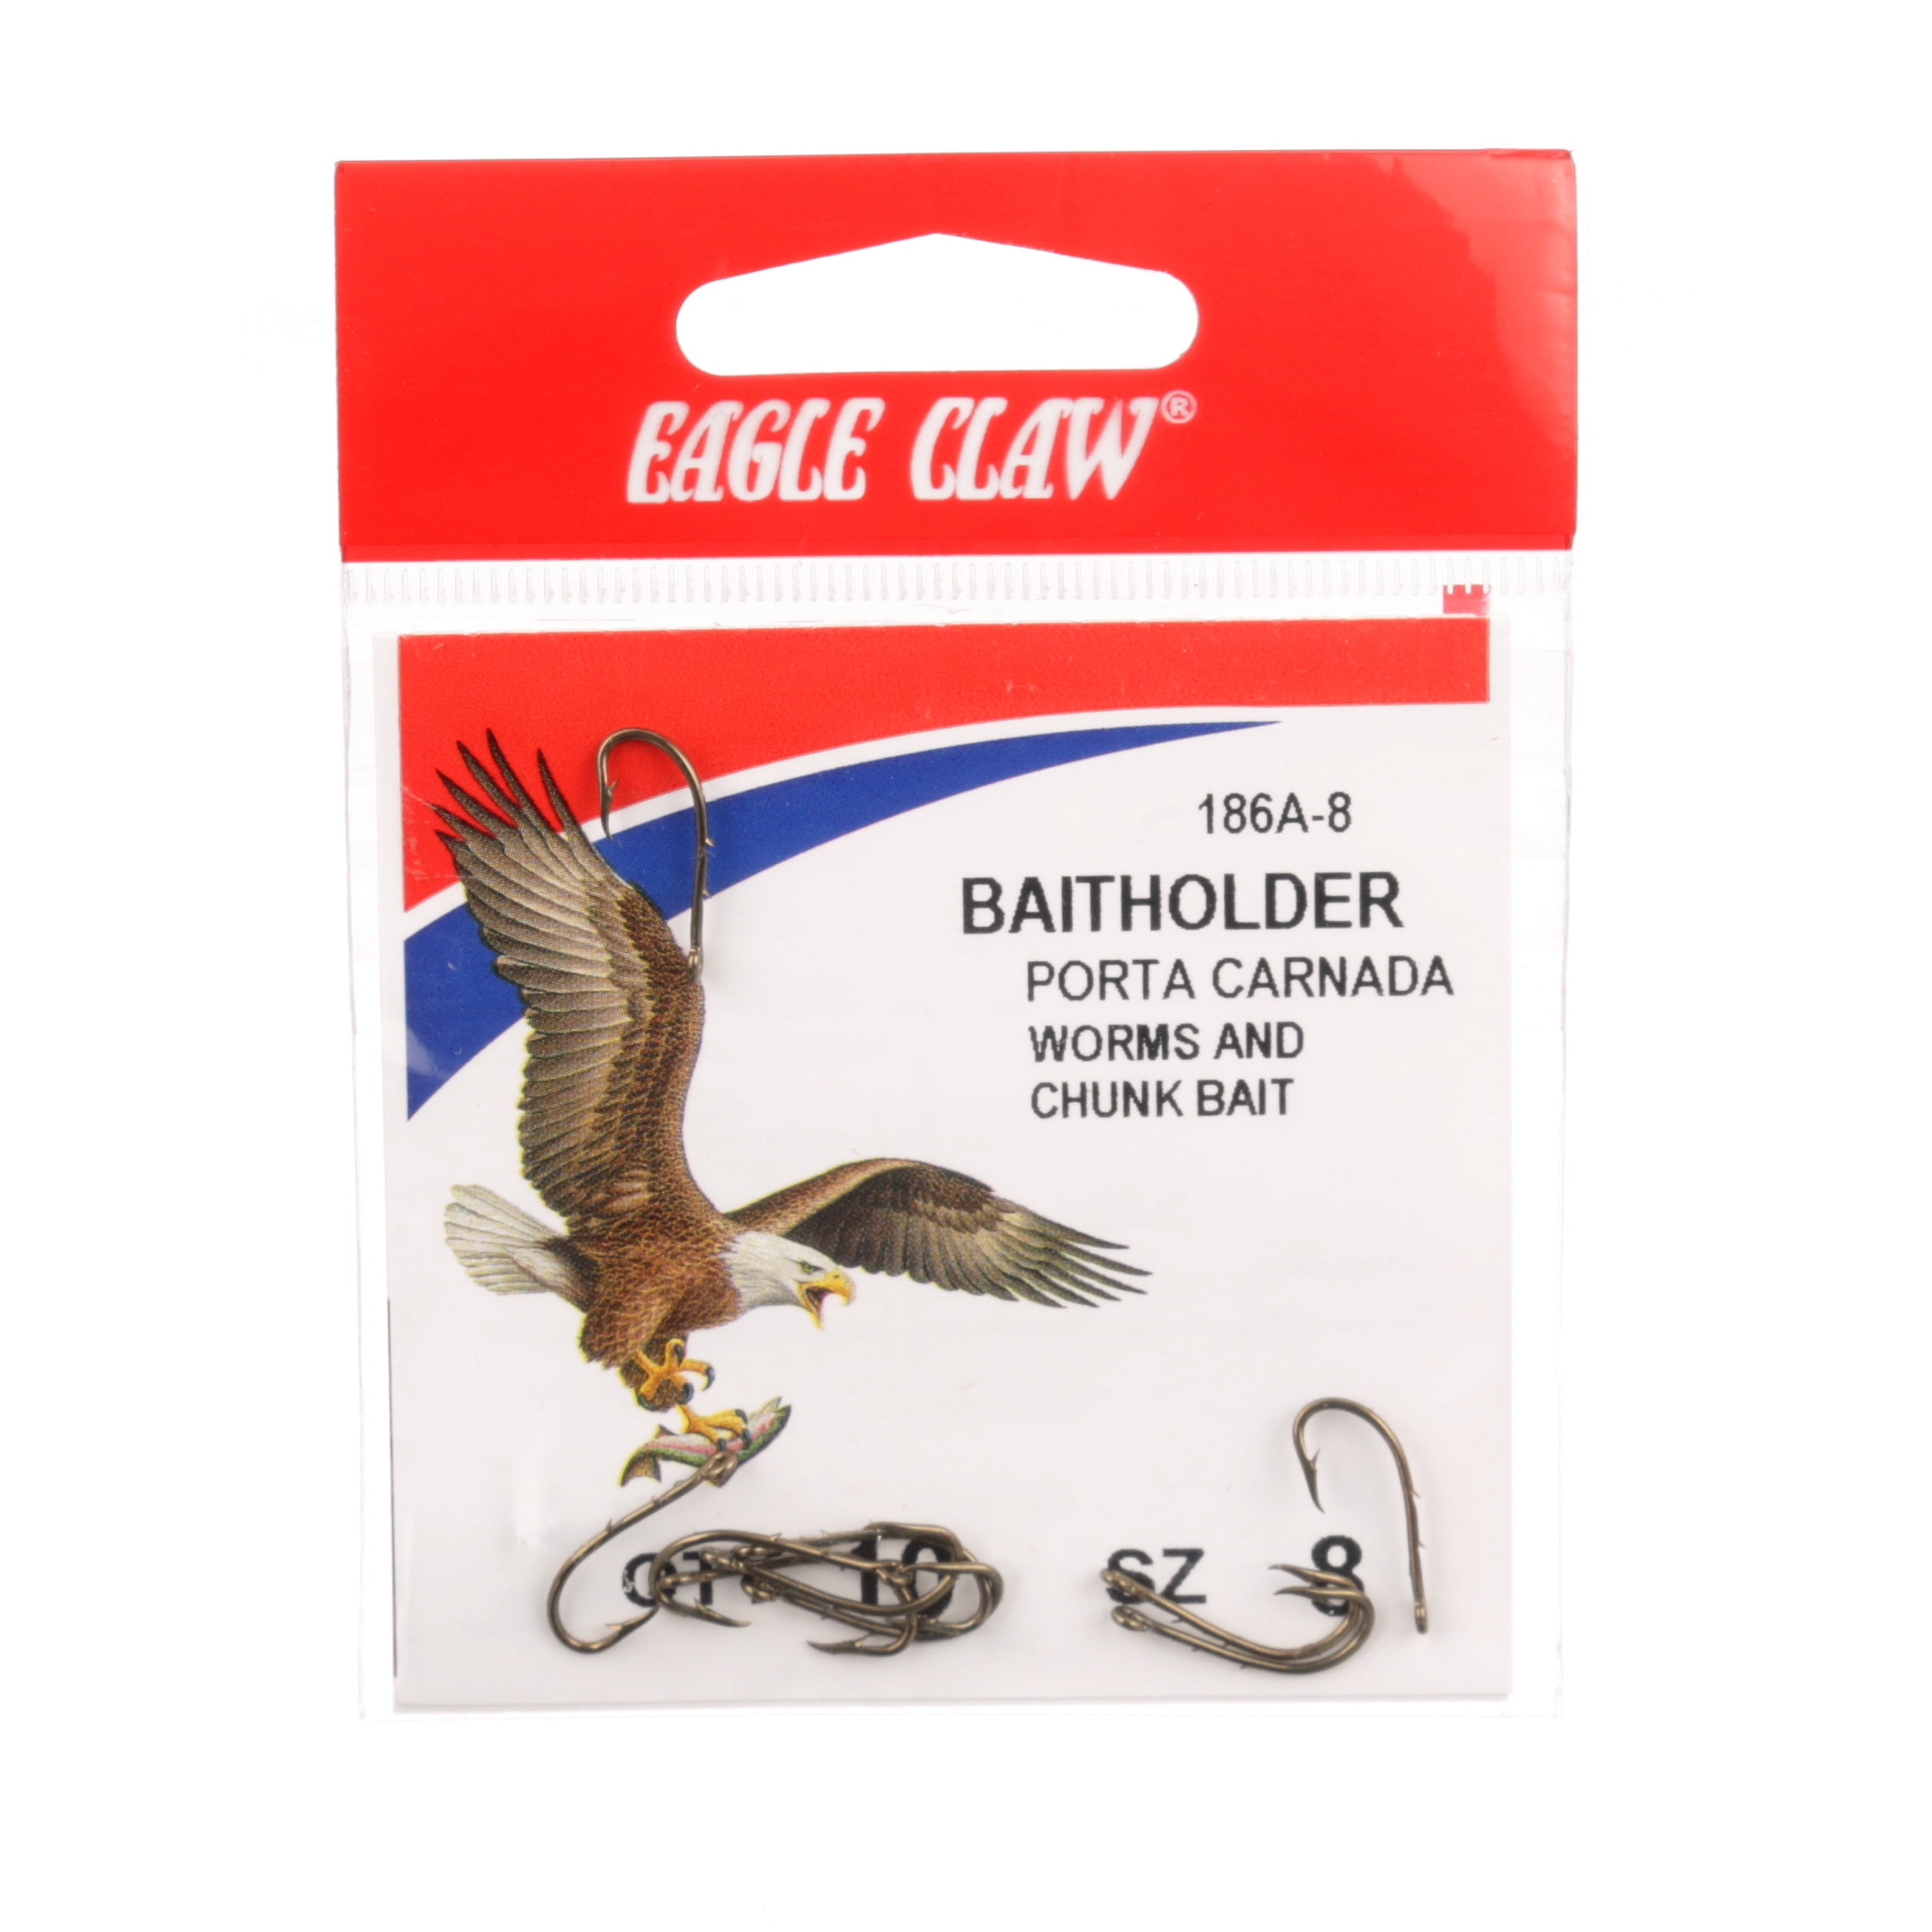 Eagle Claw 186AH-6 Baitholder 2-Slice Offset Hook, Bronze, Size 6 